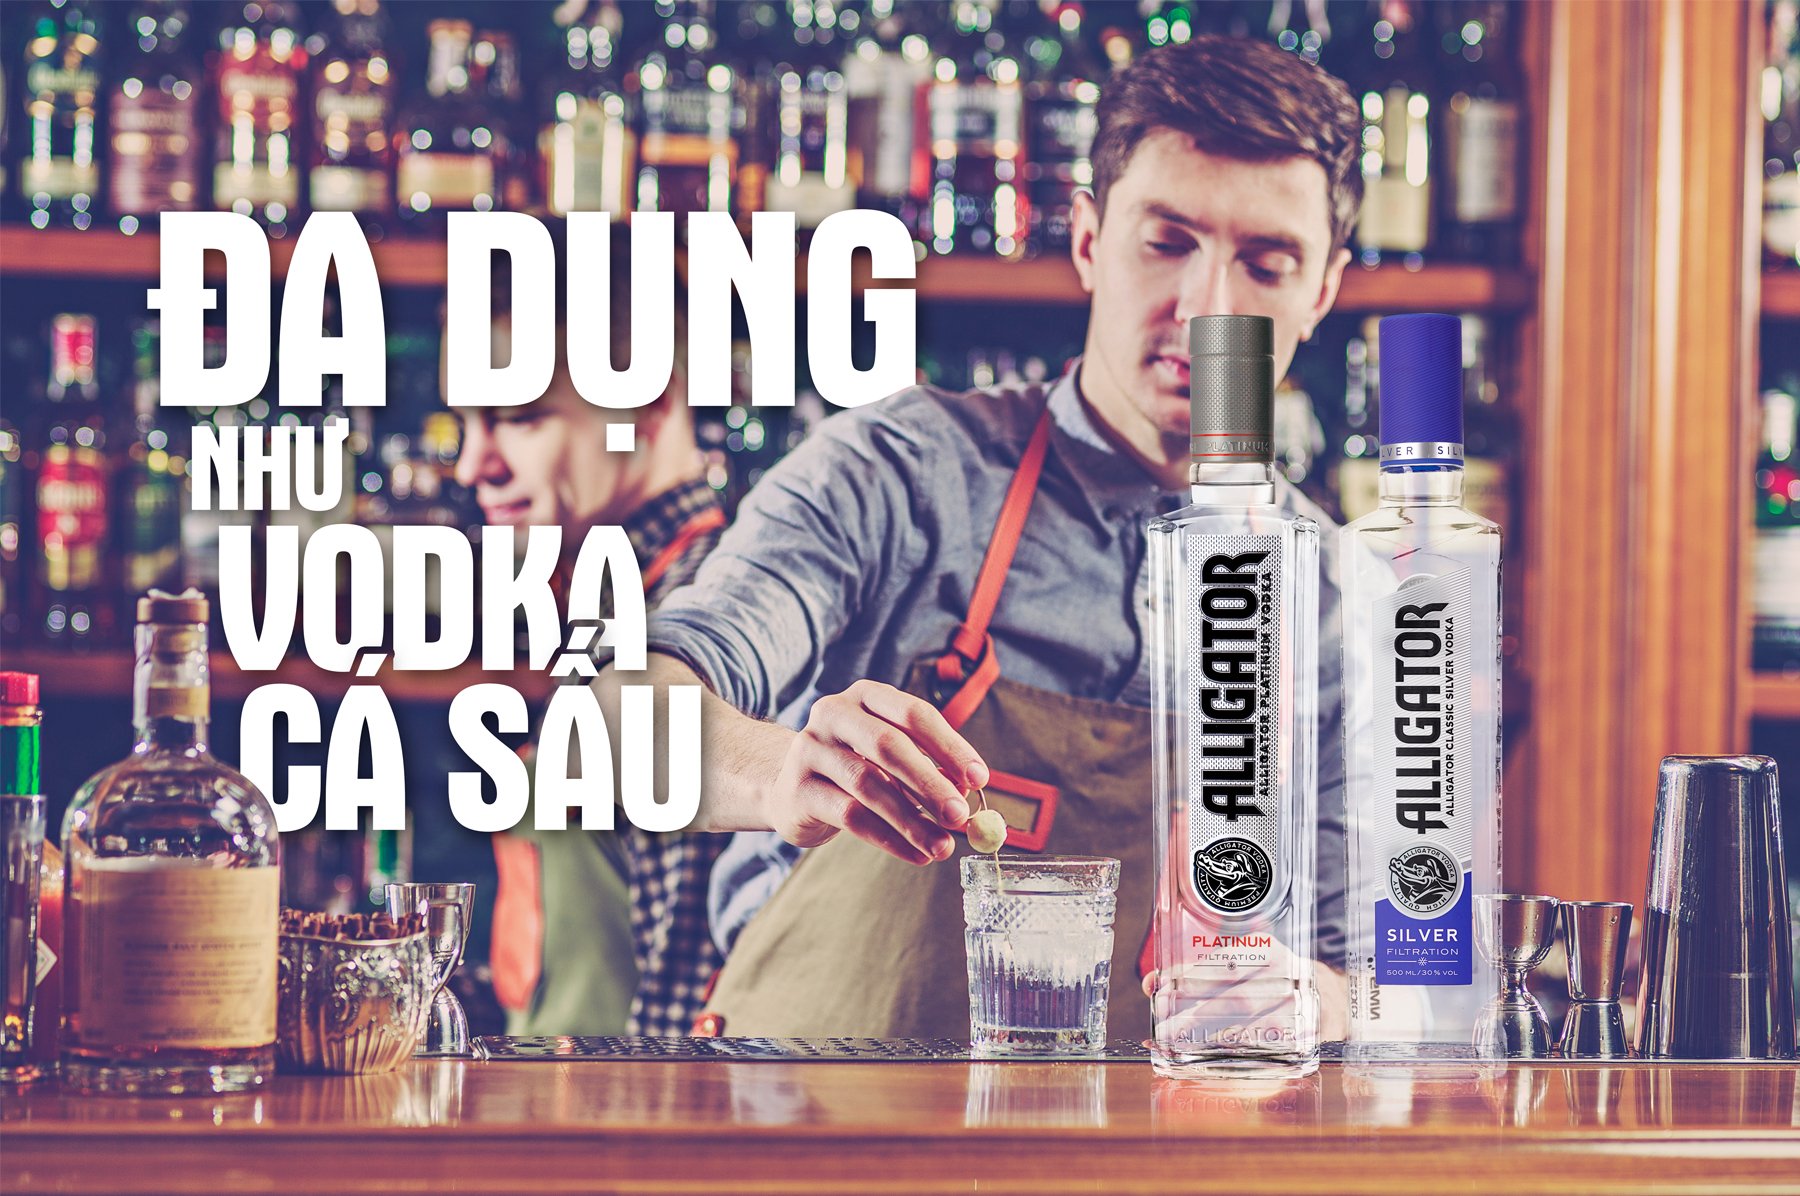 thuong-thuc-vodka-ca-sau-den-cocktail